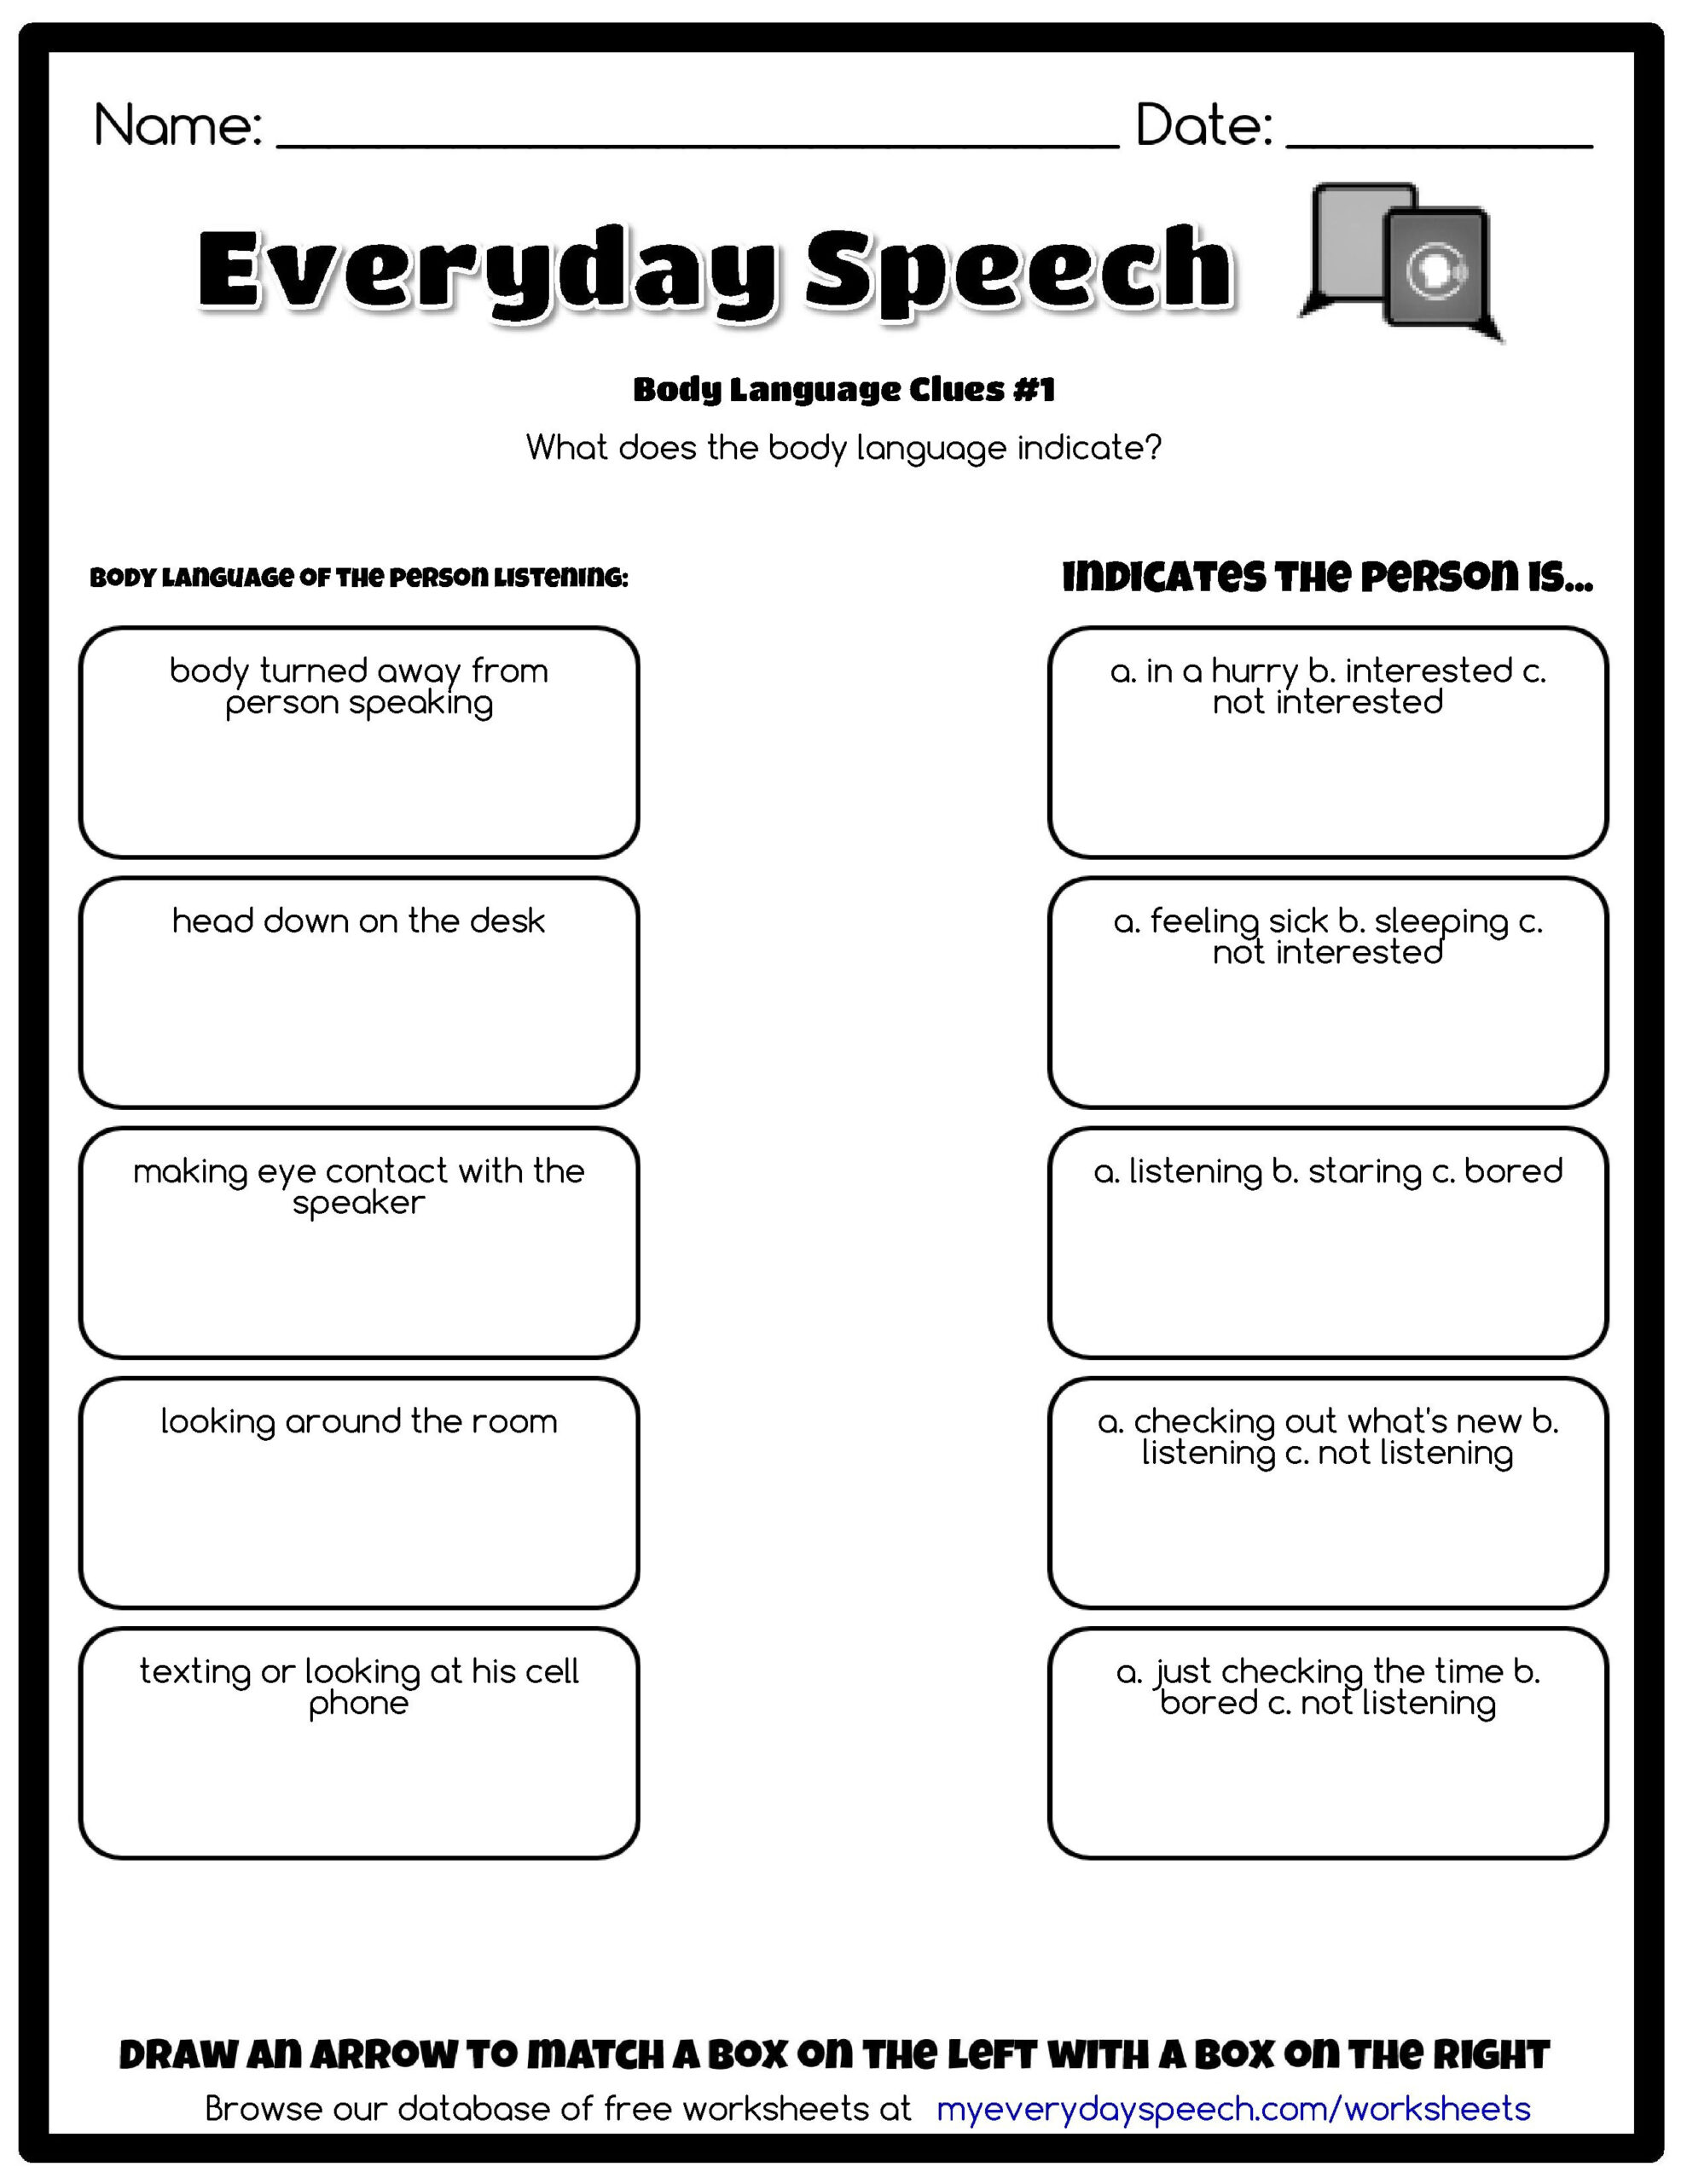 Made Using Everyday Speech s Worksheet Creator Body Language Clues 